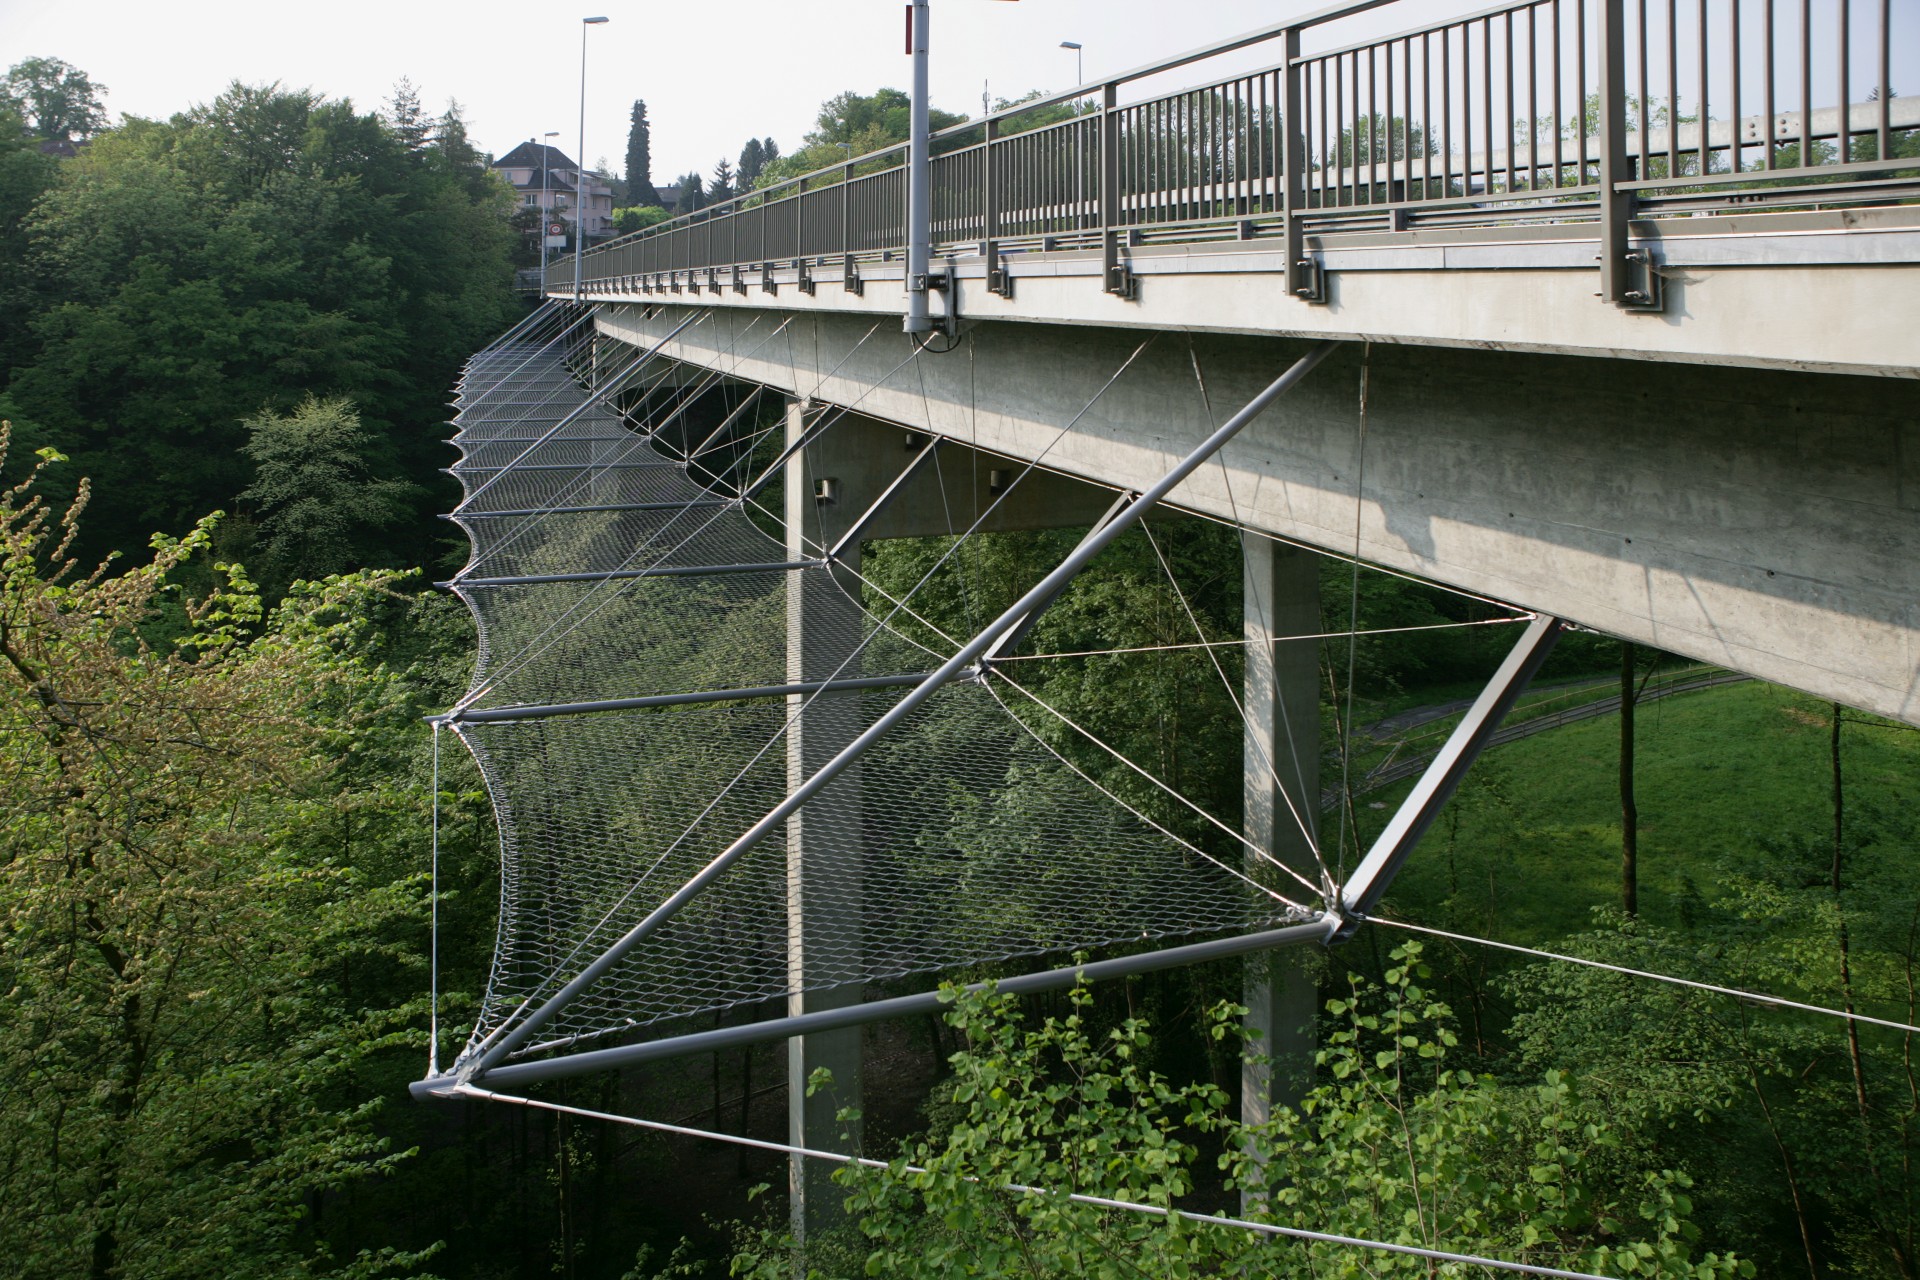 Jakob Rope Systems horizontale Sicherheitsnetz an Brücken zur Suizidprävention